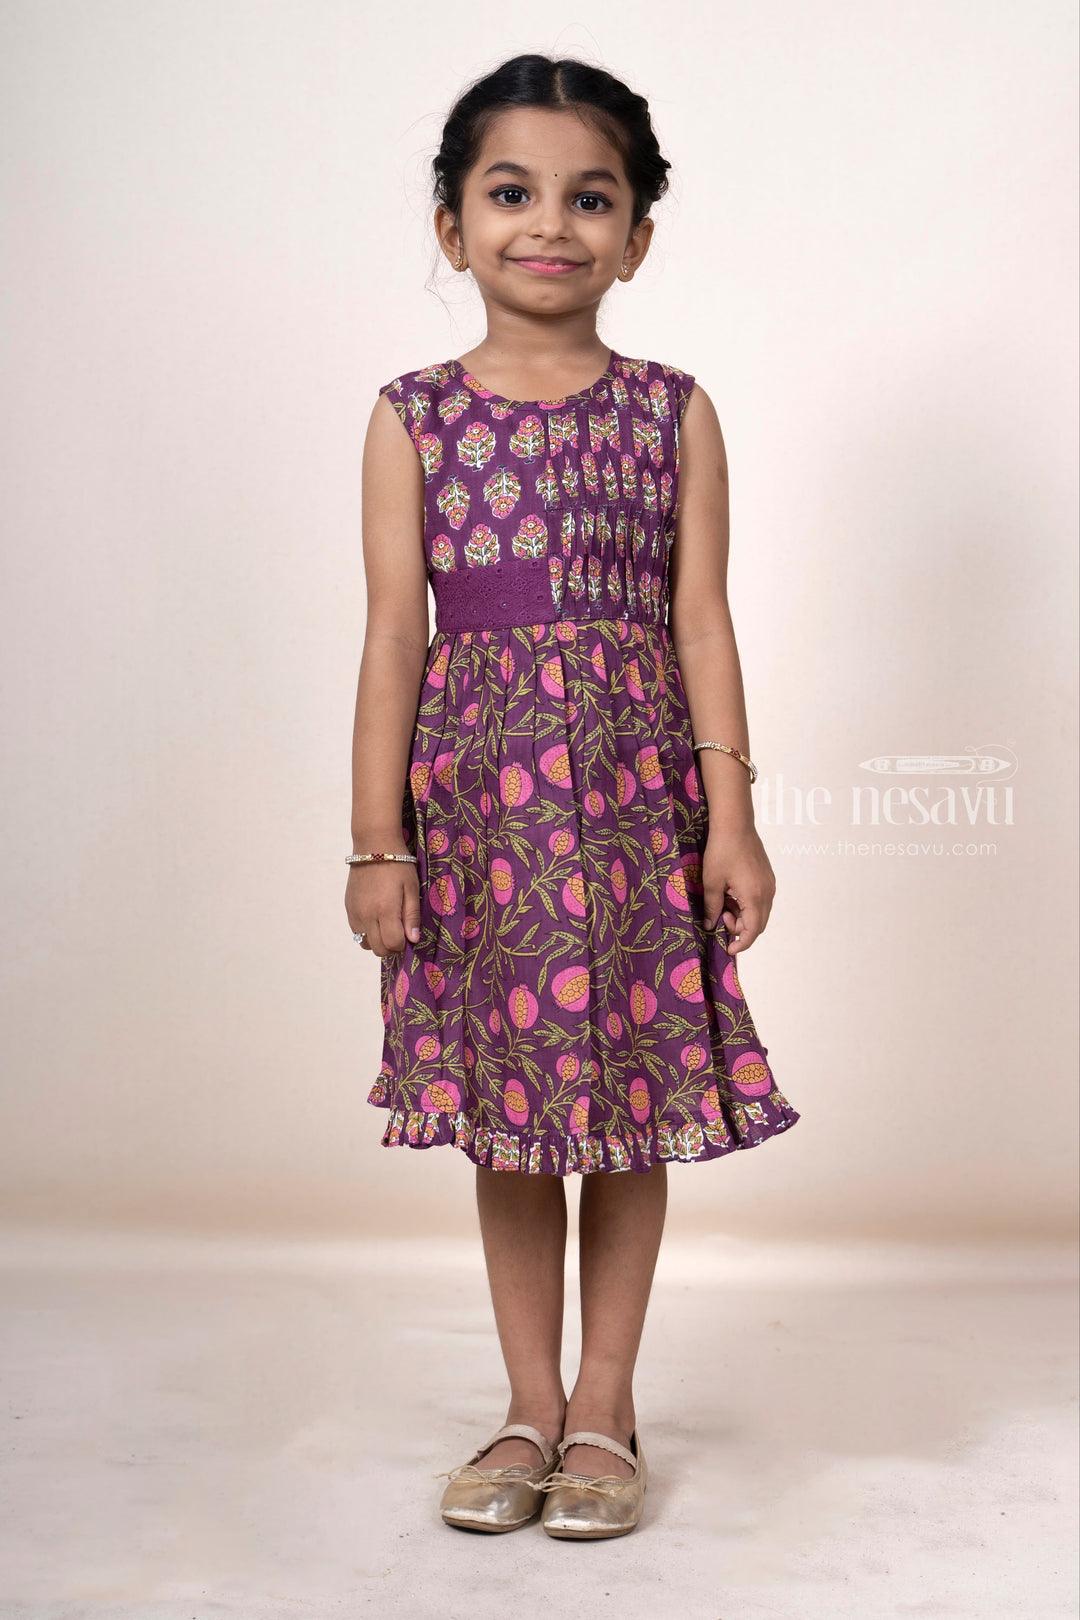 The Nesavu Frocks & Dresses Magenta Pink Floral Pin-Tucked Soft Cotton Gown For Baby Girls psr silks Nesavu